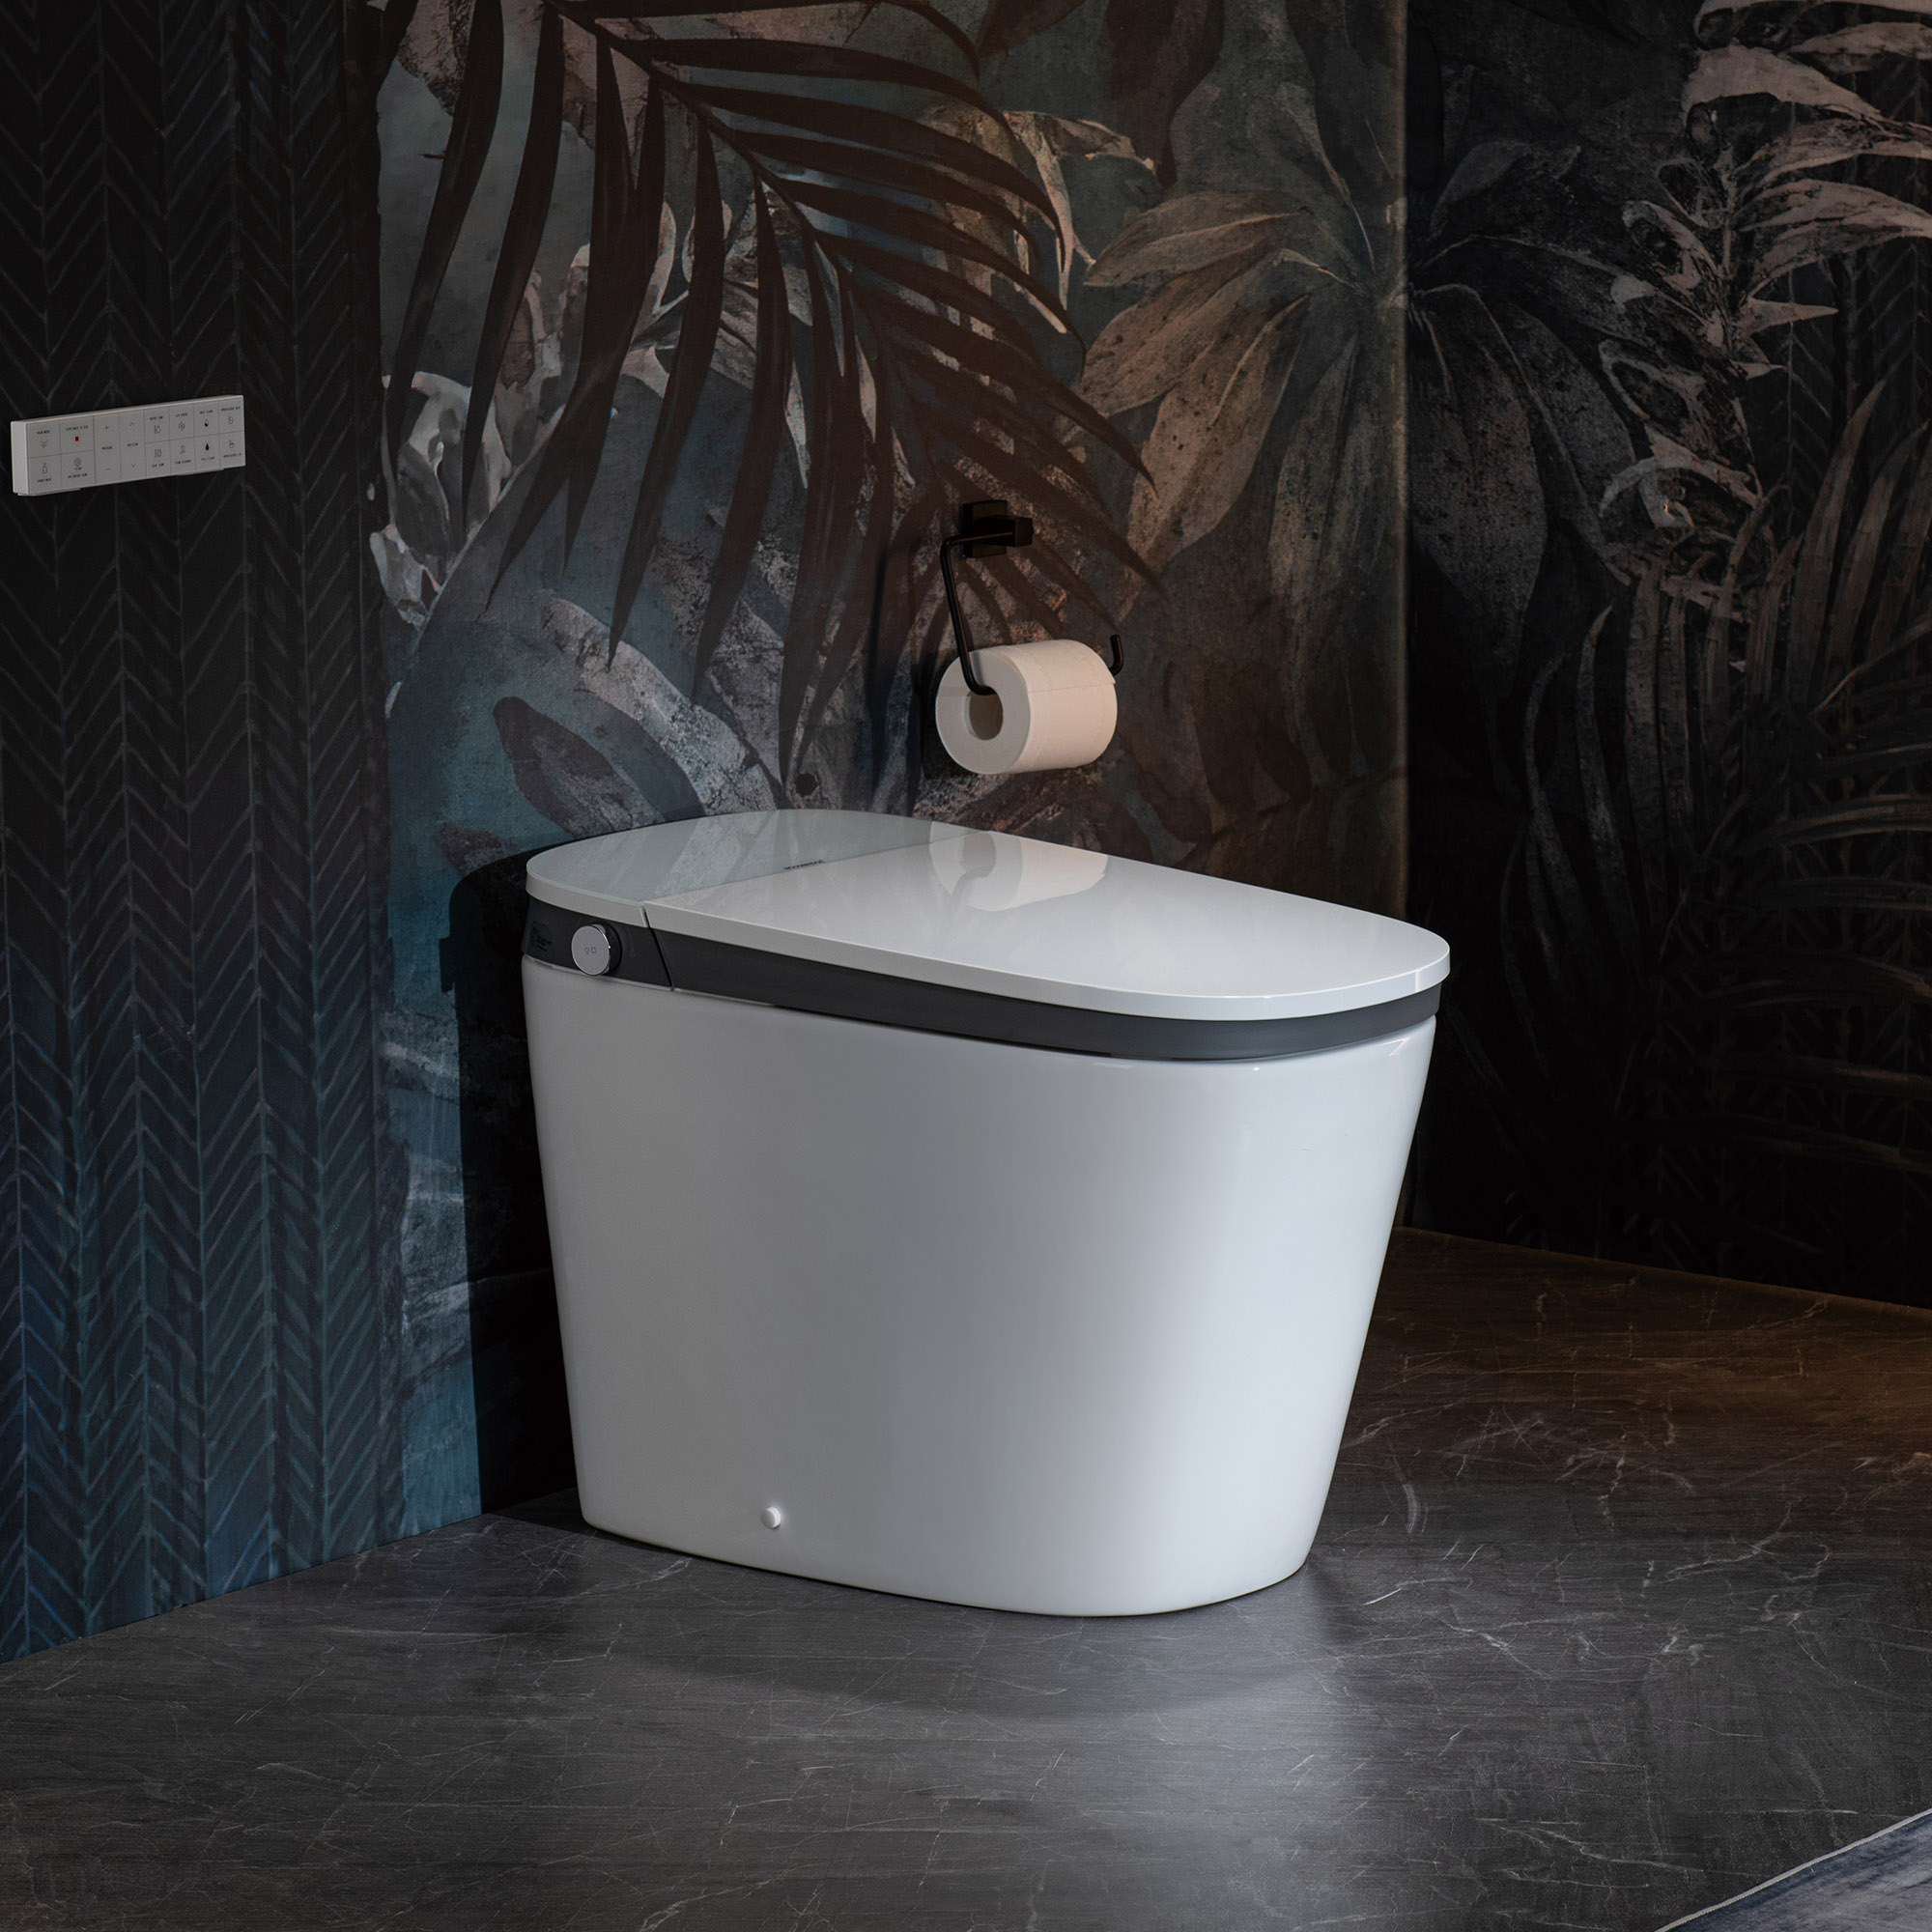  WOODBRIDGE B0931S Smart Bidet Toilet with 1.28 GPF Dual Flush Auto Open & Close, Foot Sensor Flush, Voice Control,1000 Gram Map Flushing Score, LED Display, Chair Height Design and Cleaning Foam Dispenser_13919